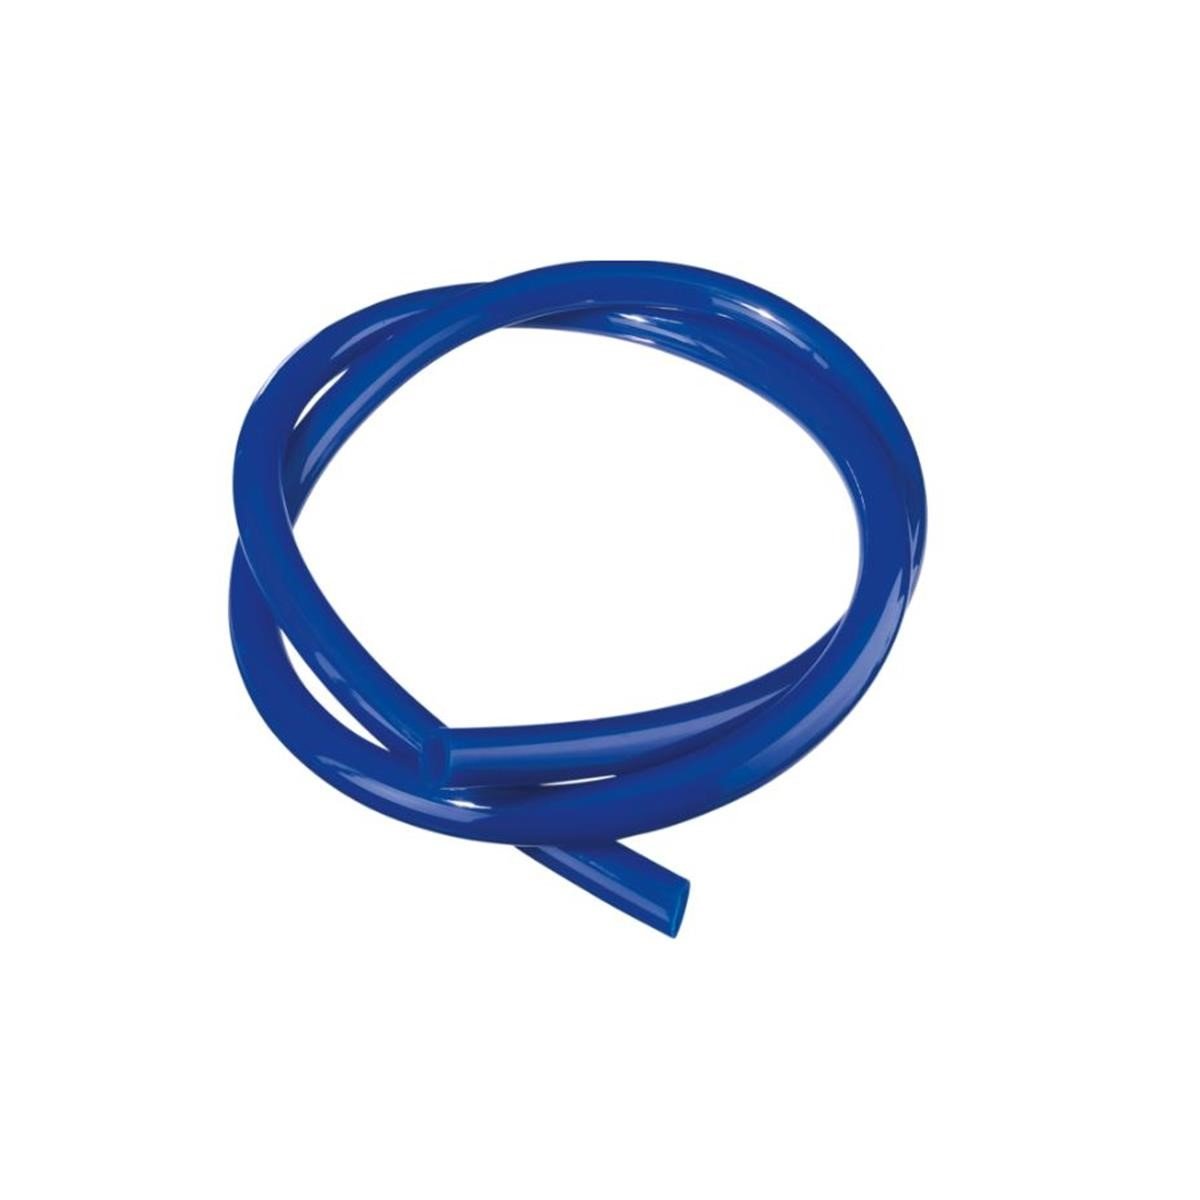 Moose Racing fuel hose 4.8 mm Blue, 91 cm long